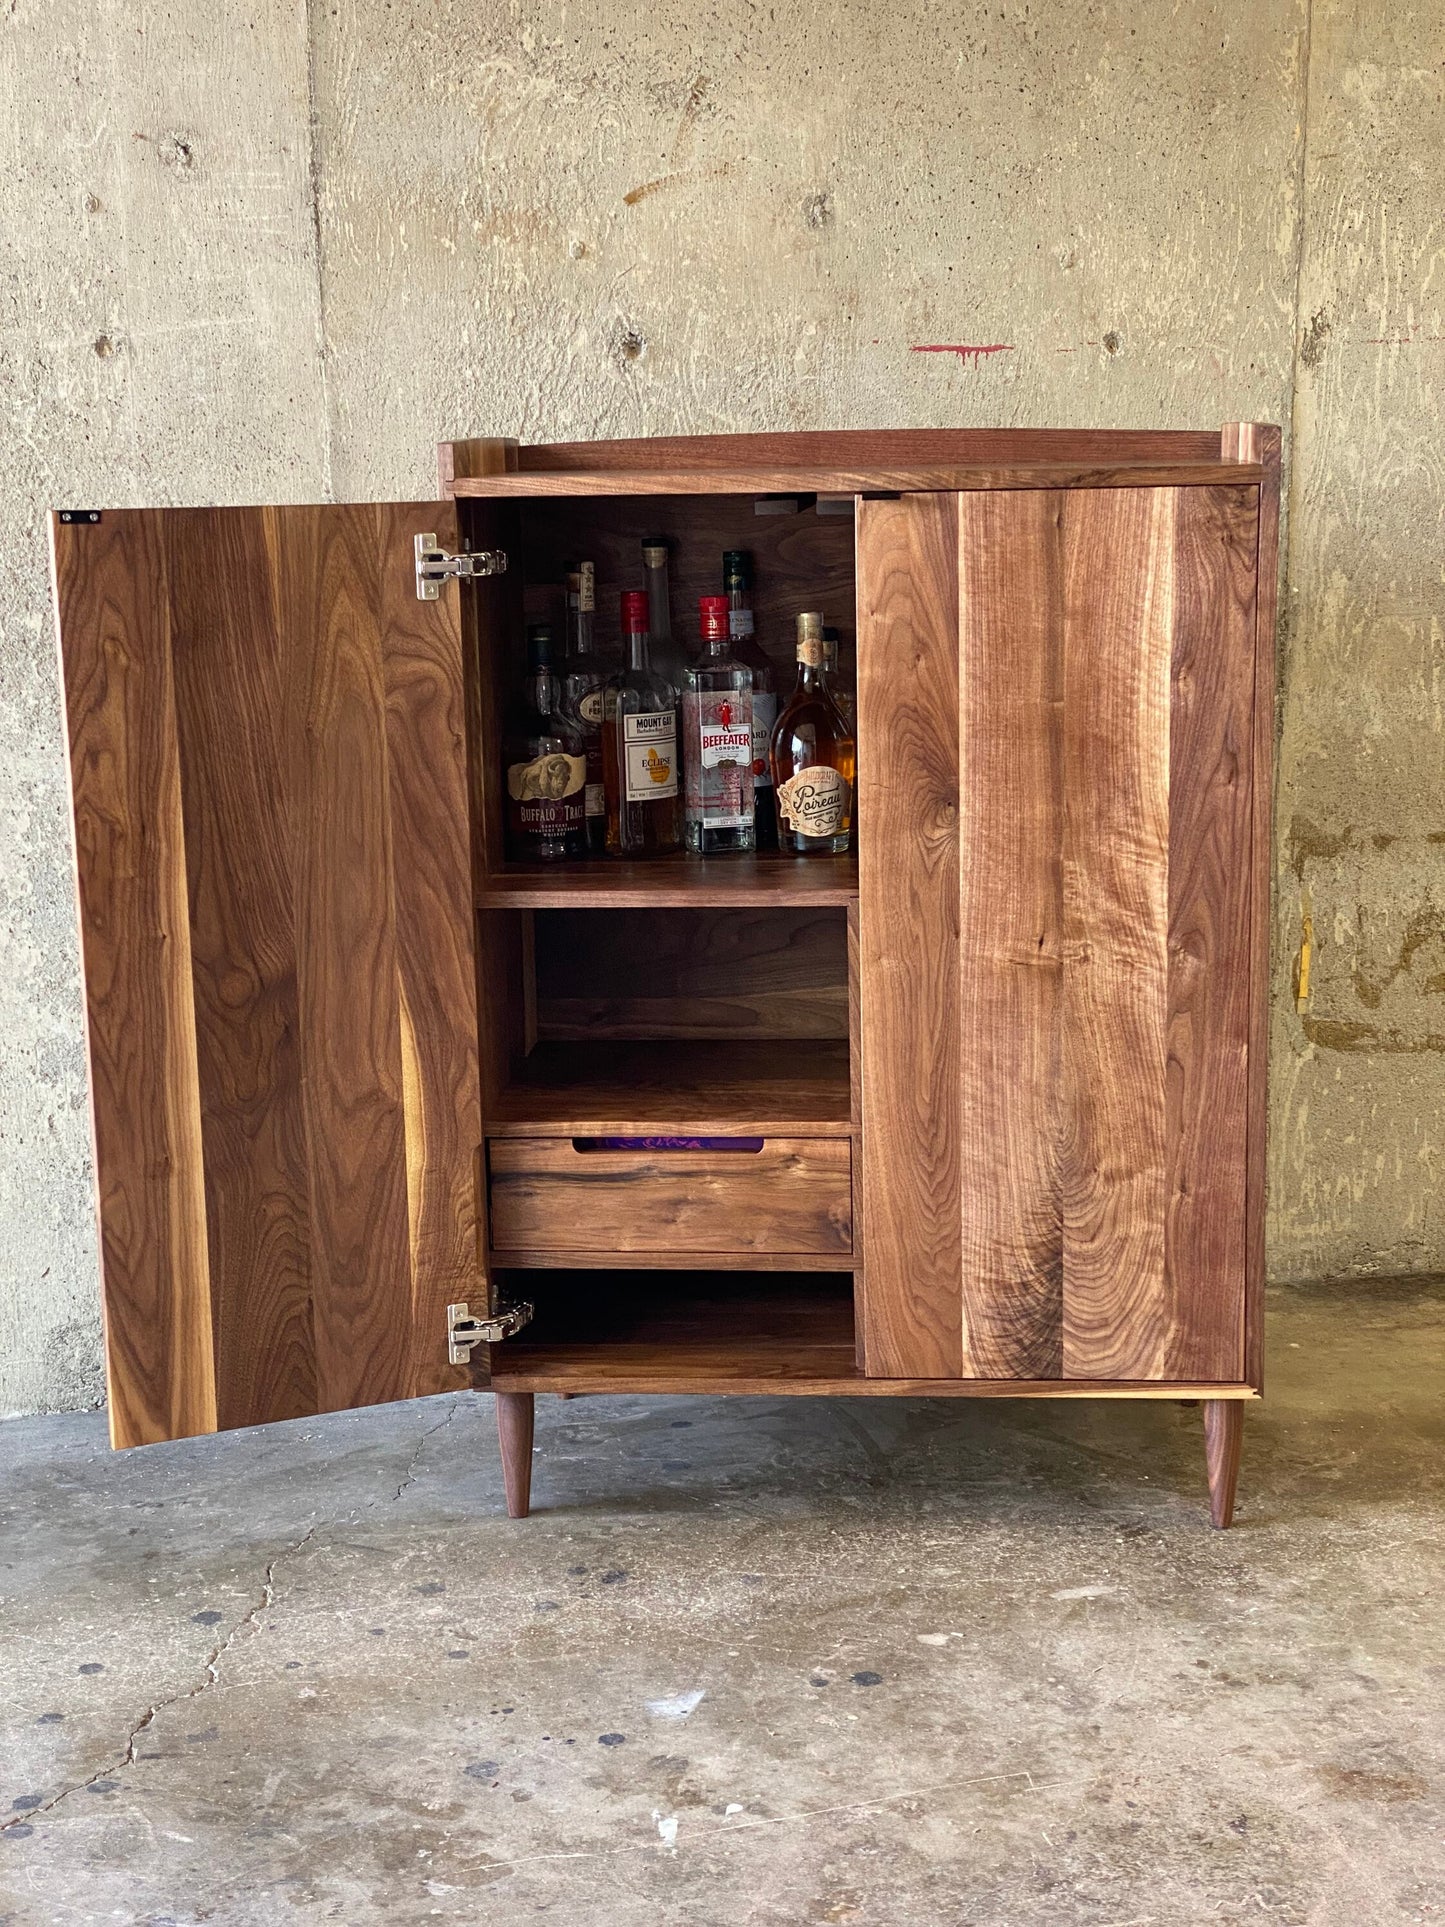 the “Tall” Shenandoah Liquor & Wine Cabinet